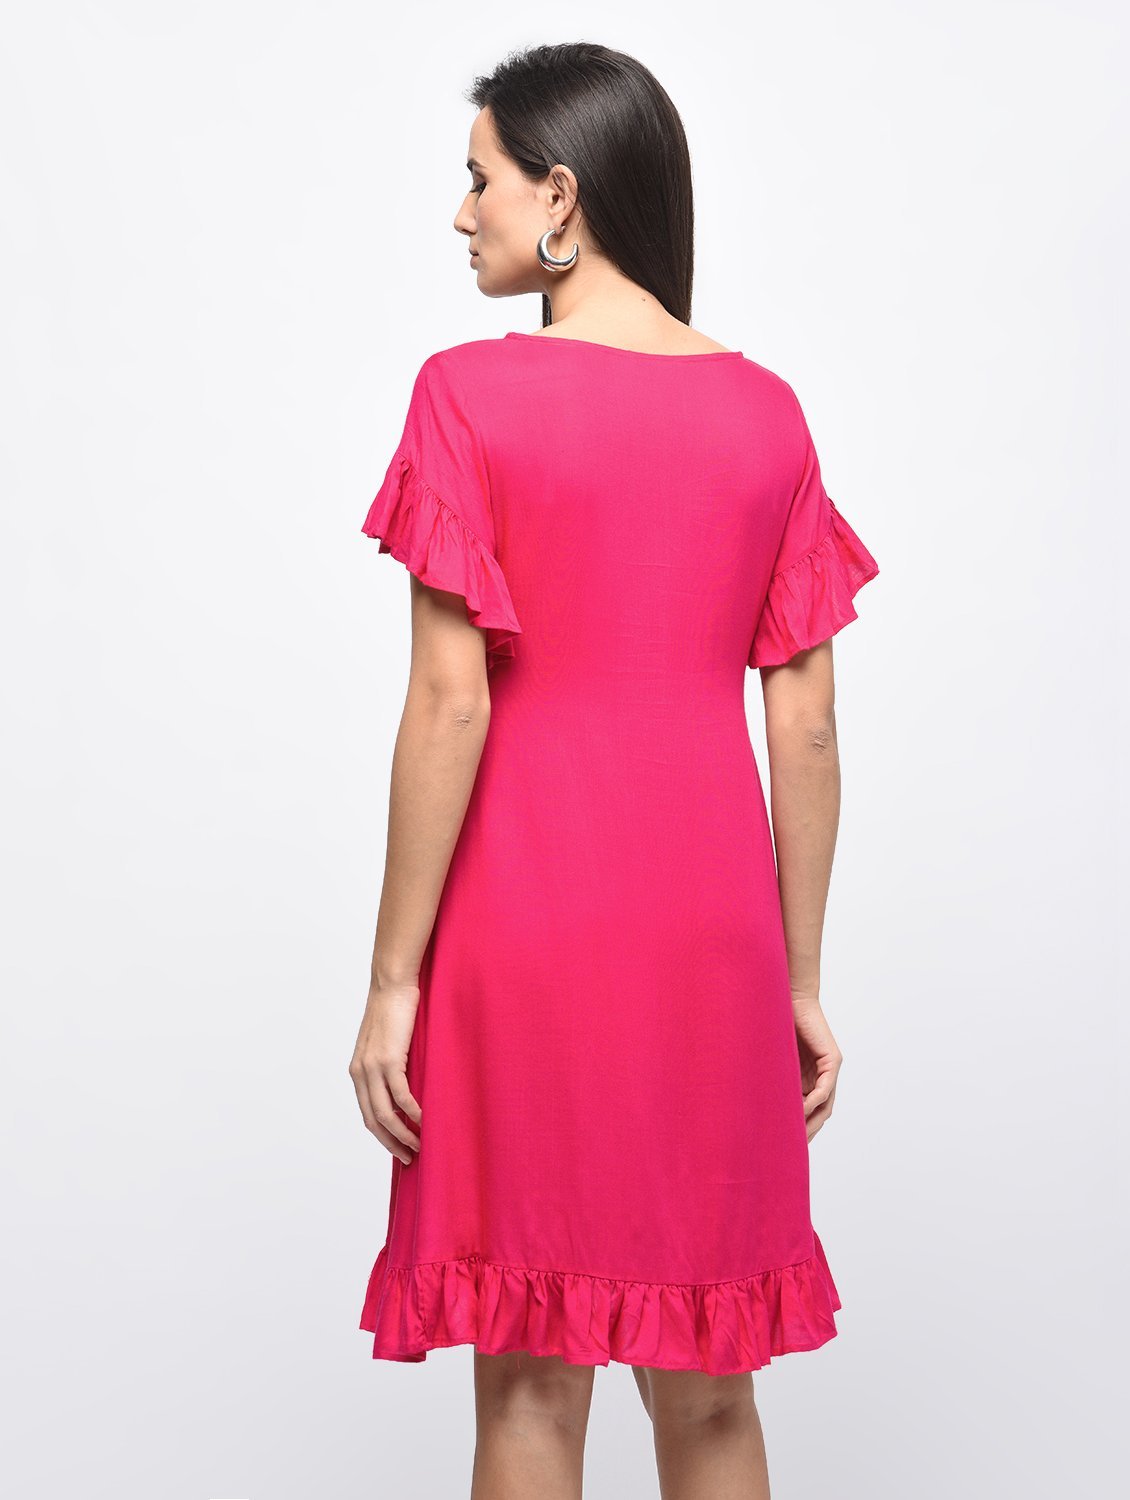 Women's Pink Rayon Solid Flared Sleeve Round Neck Dress - Myshka